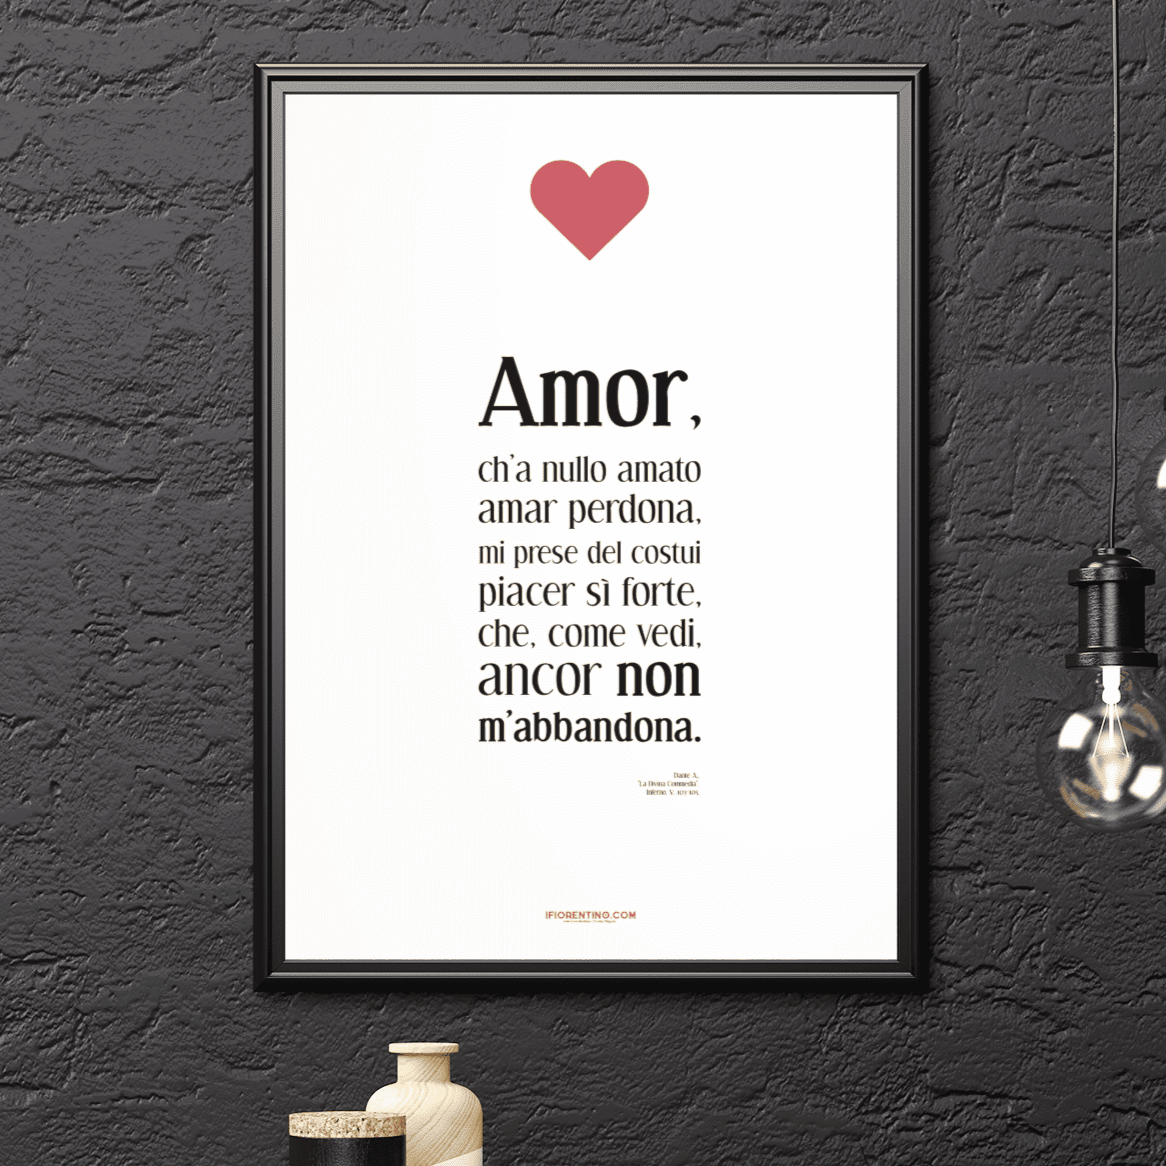 Amor ch'a nulla amato.. (DANTE - Inferno) - poster fiorentini - poster firenze - regalo fiorentino - fiorentino  - foppeddittelo